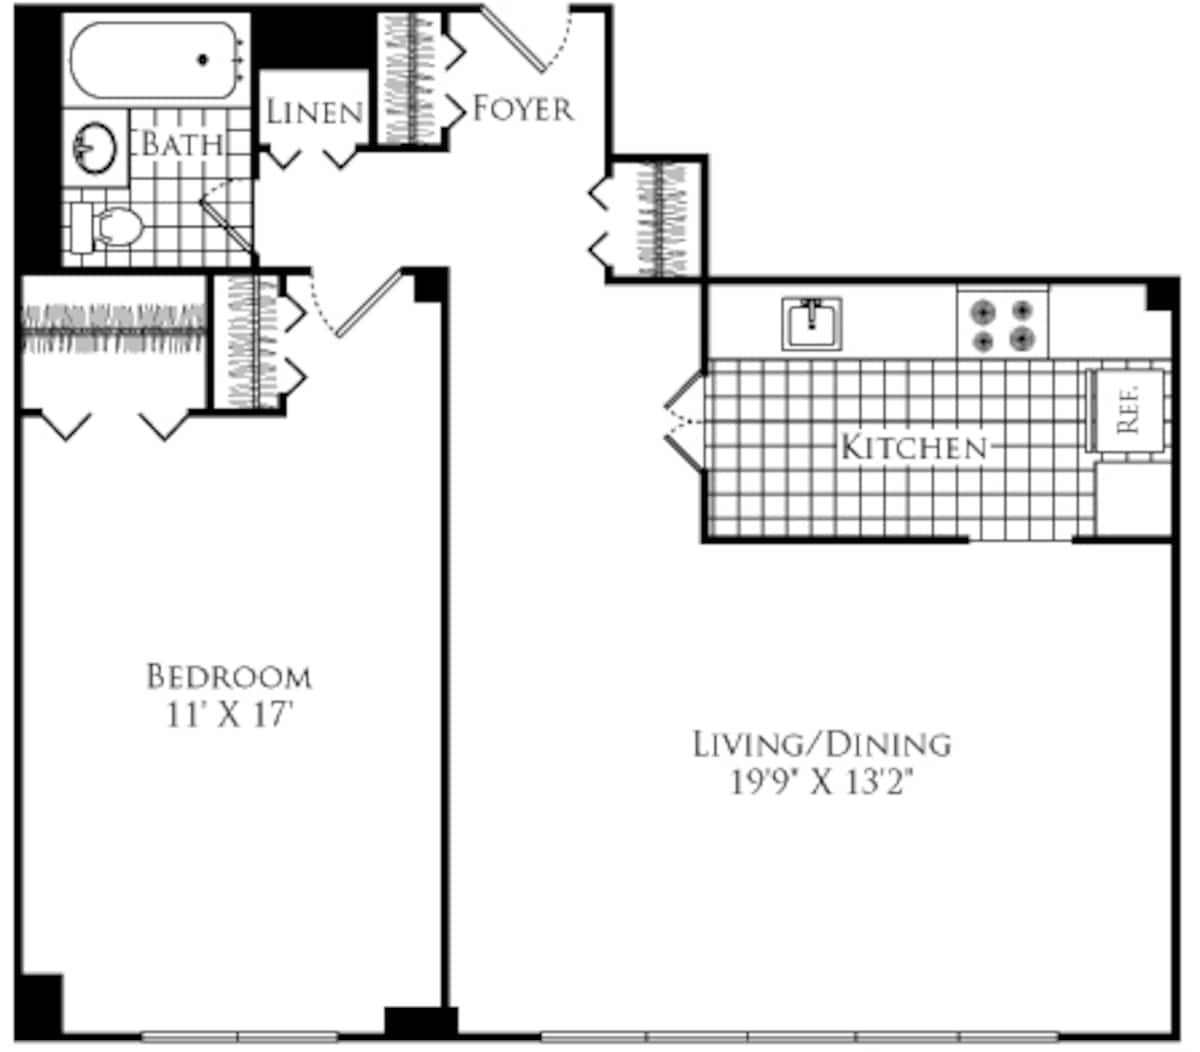 Floorplan diagram for The Cadbury, showing 1 bedroom